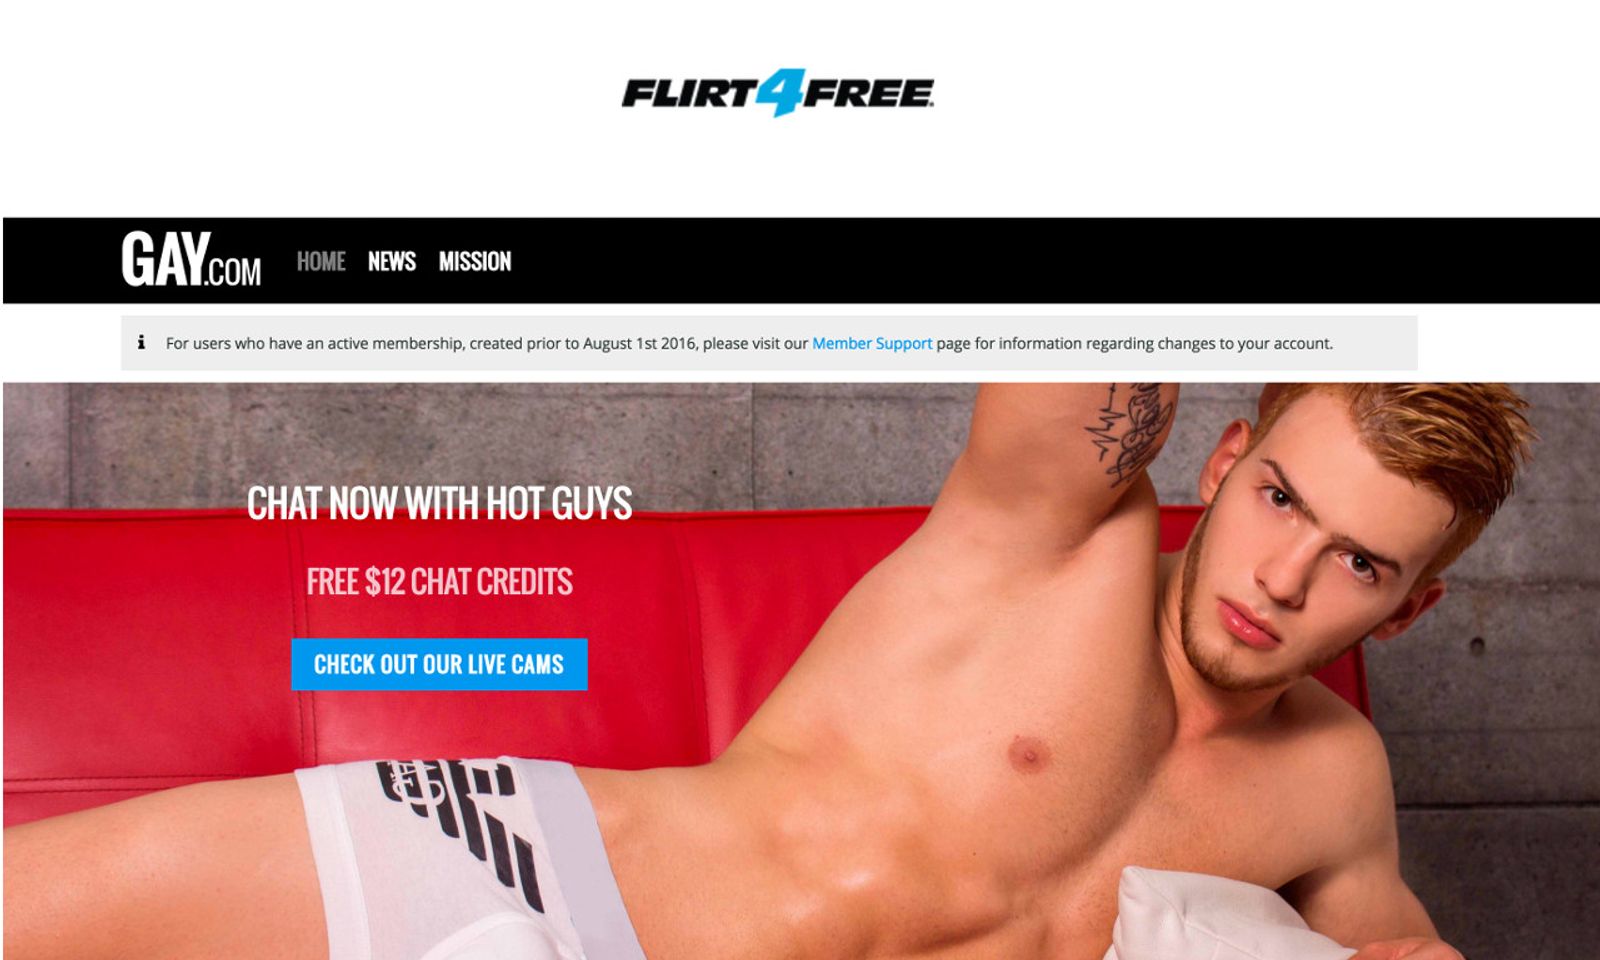 Flirt4Free Acquires Gay.com, Gay.net